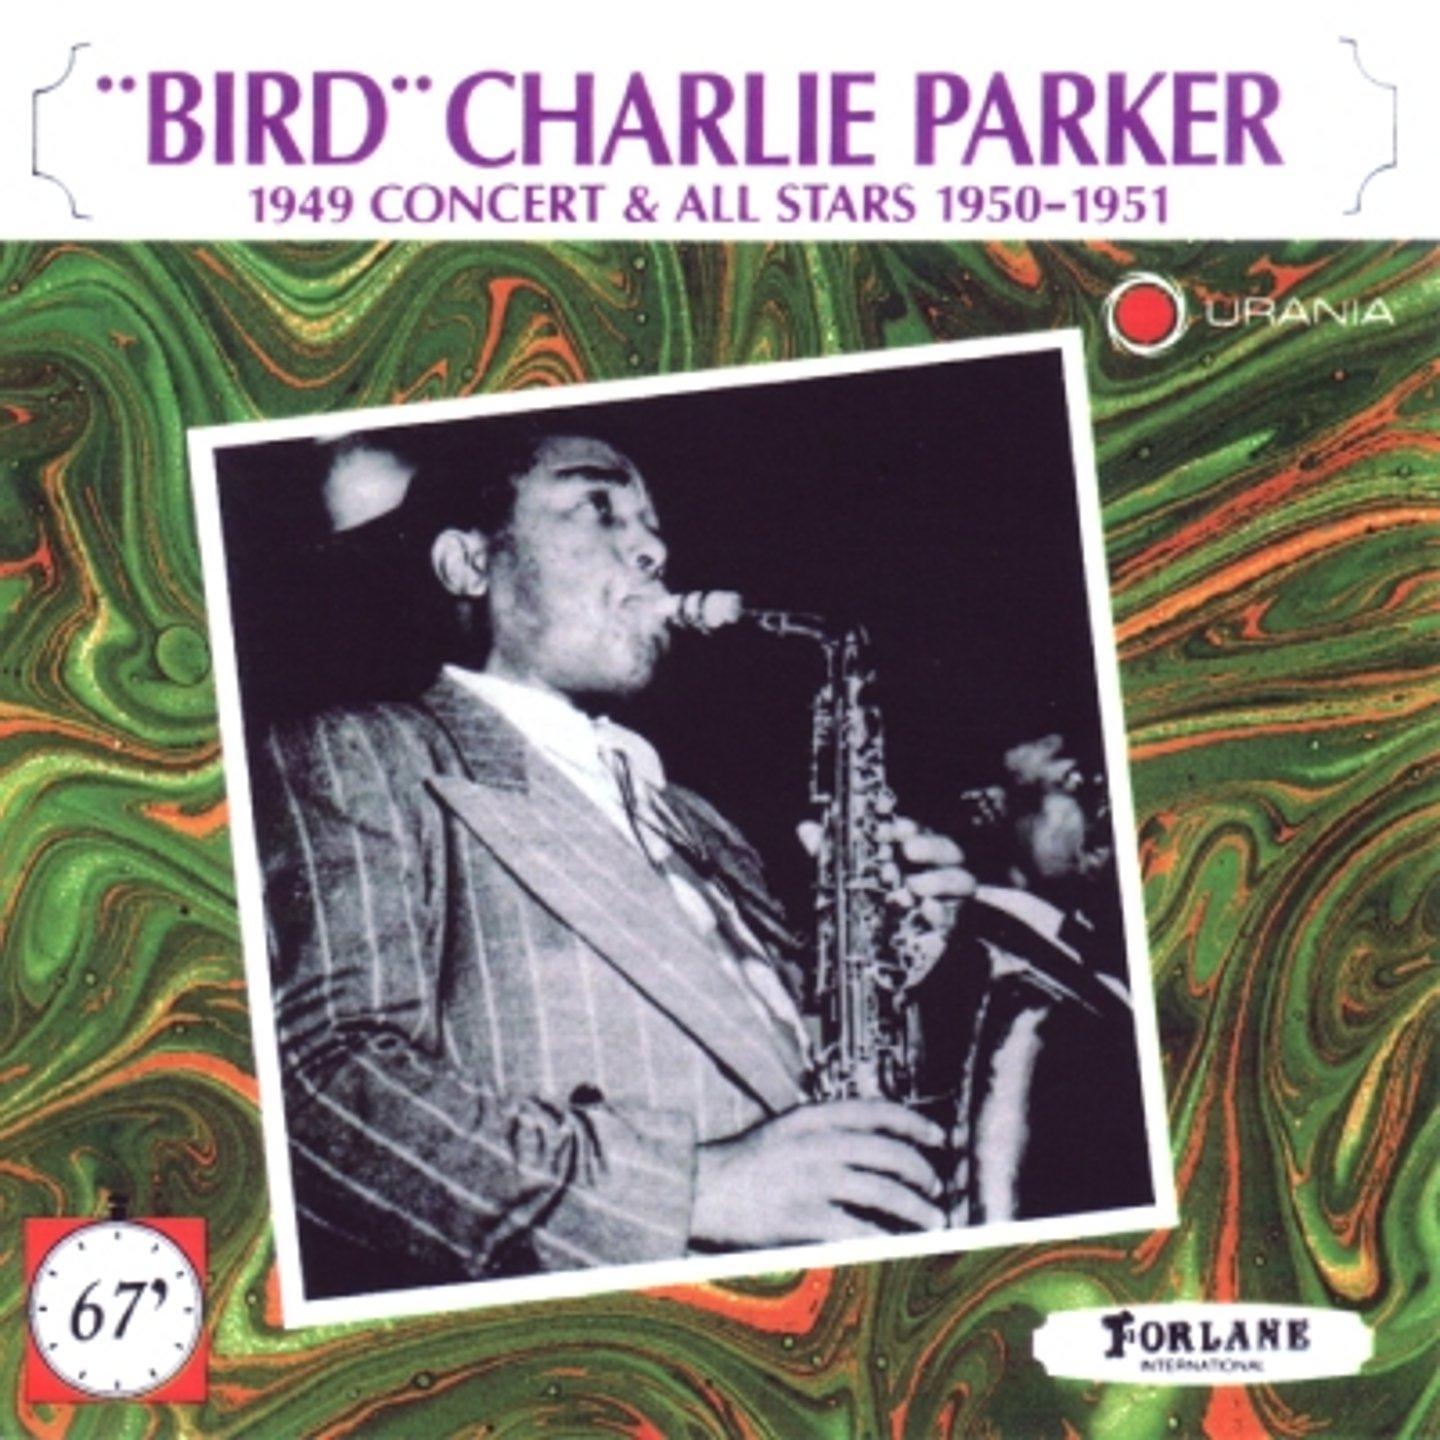 "Bird" Charlie Parker